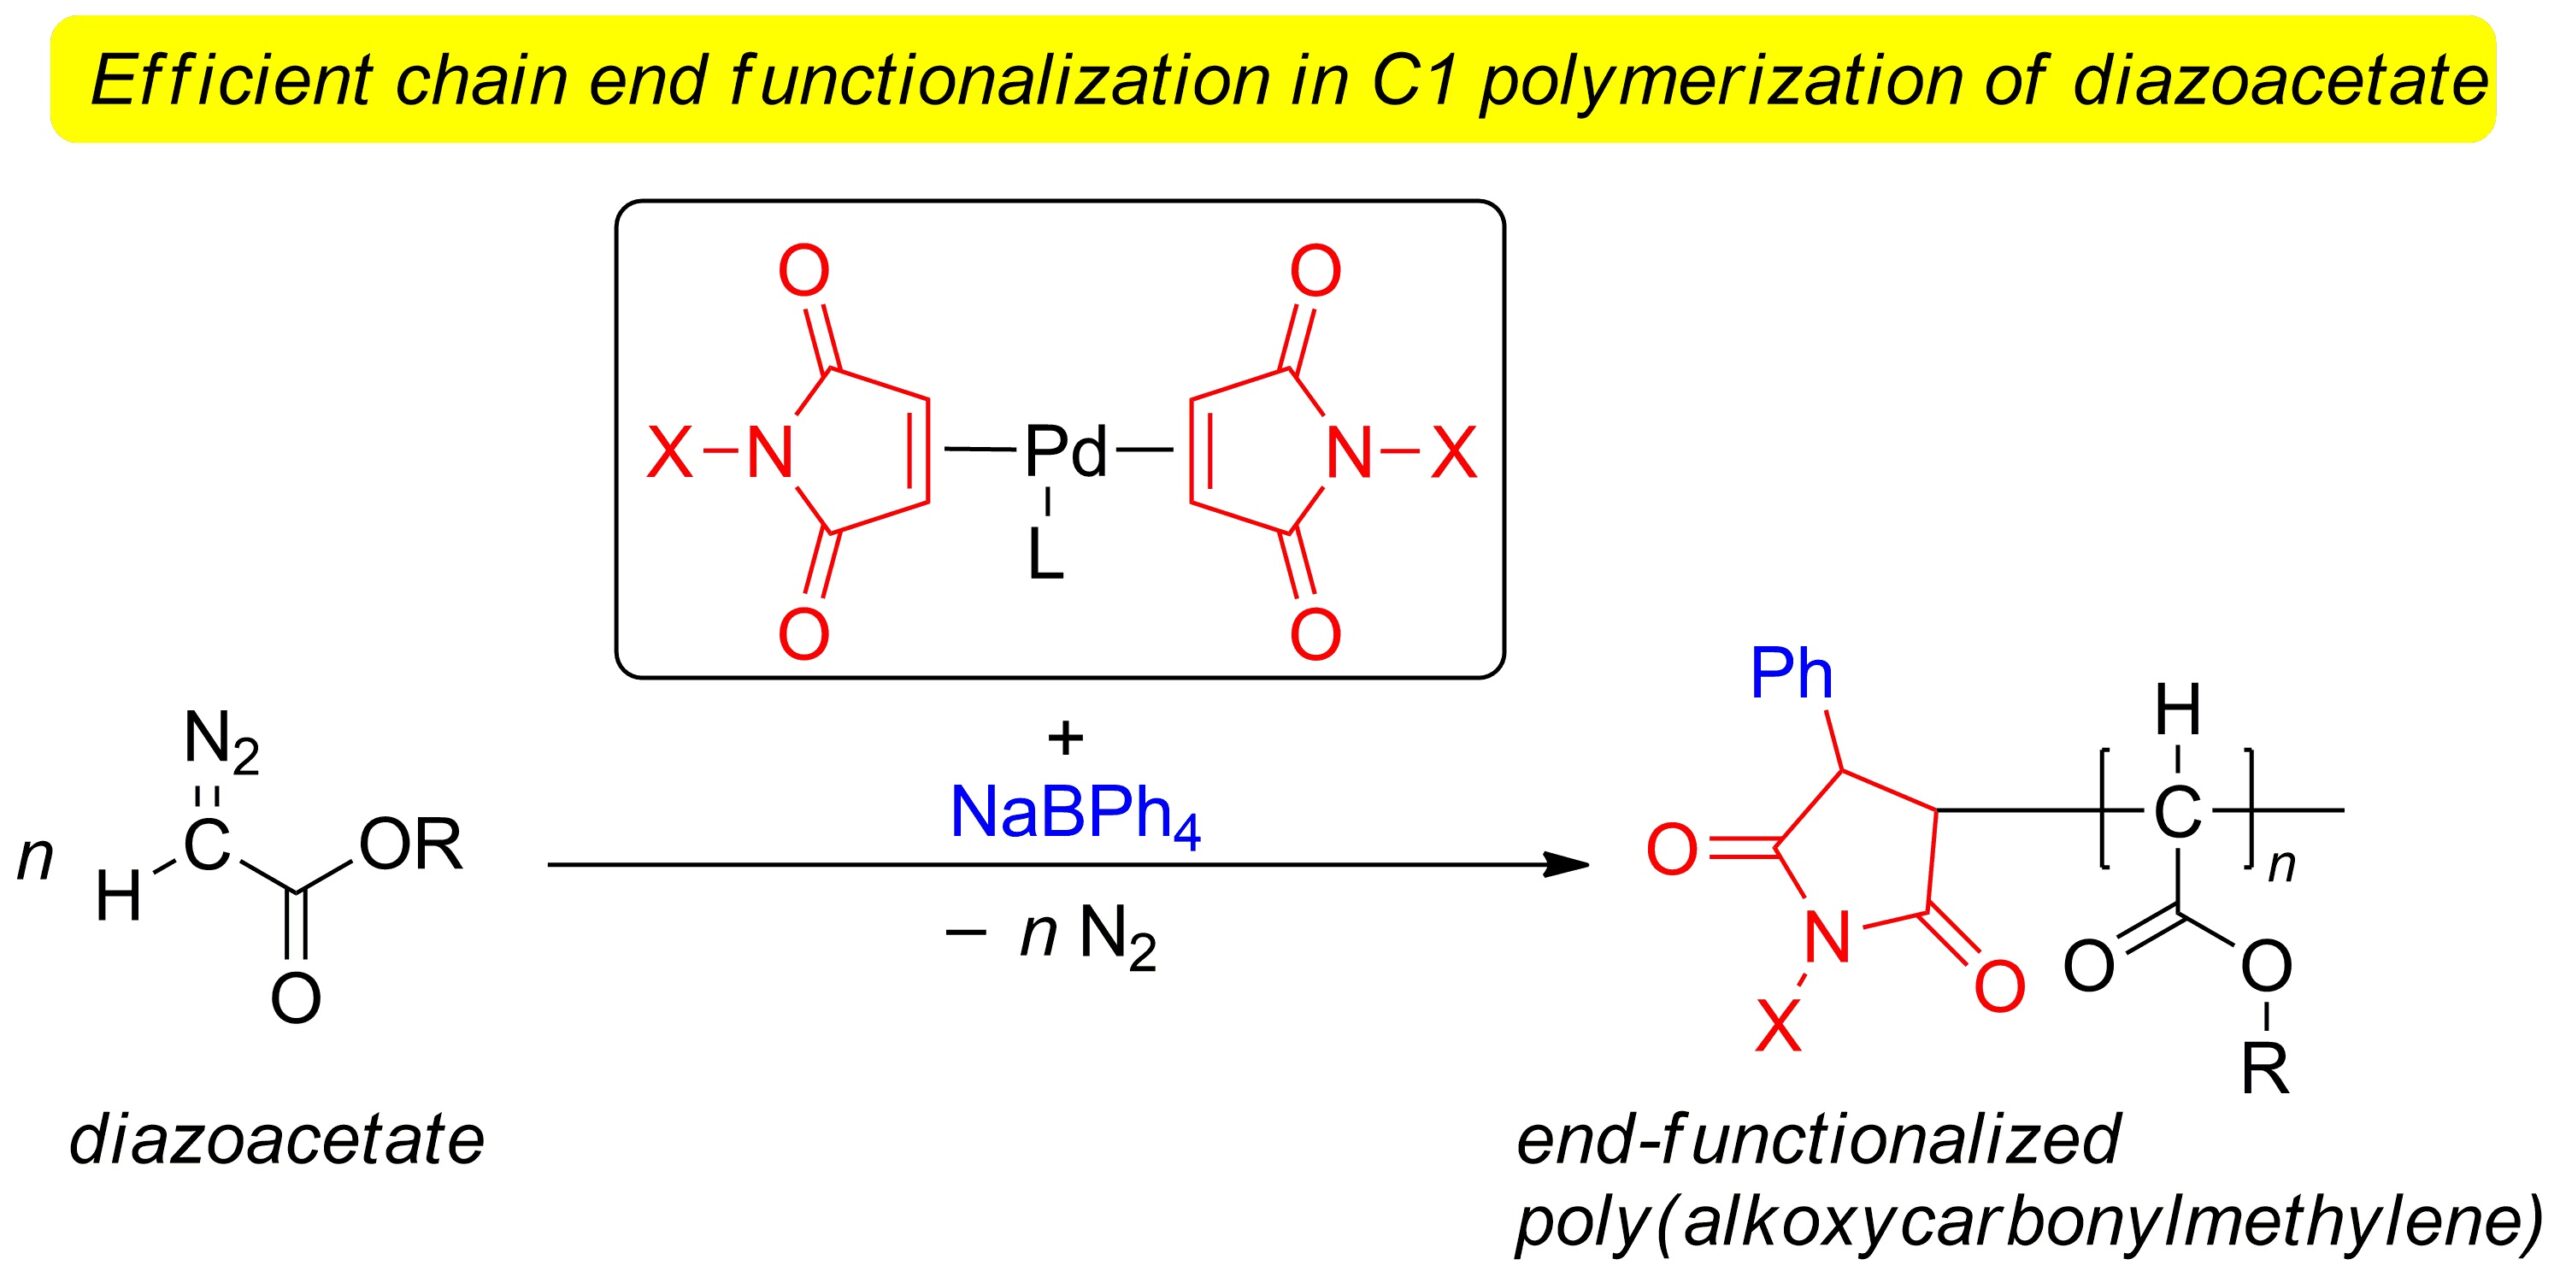  Synthesis of end-functionalized poly(alkoxycarbonylmethylene)